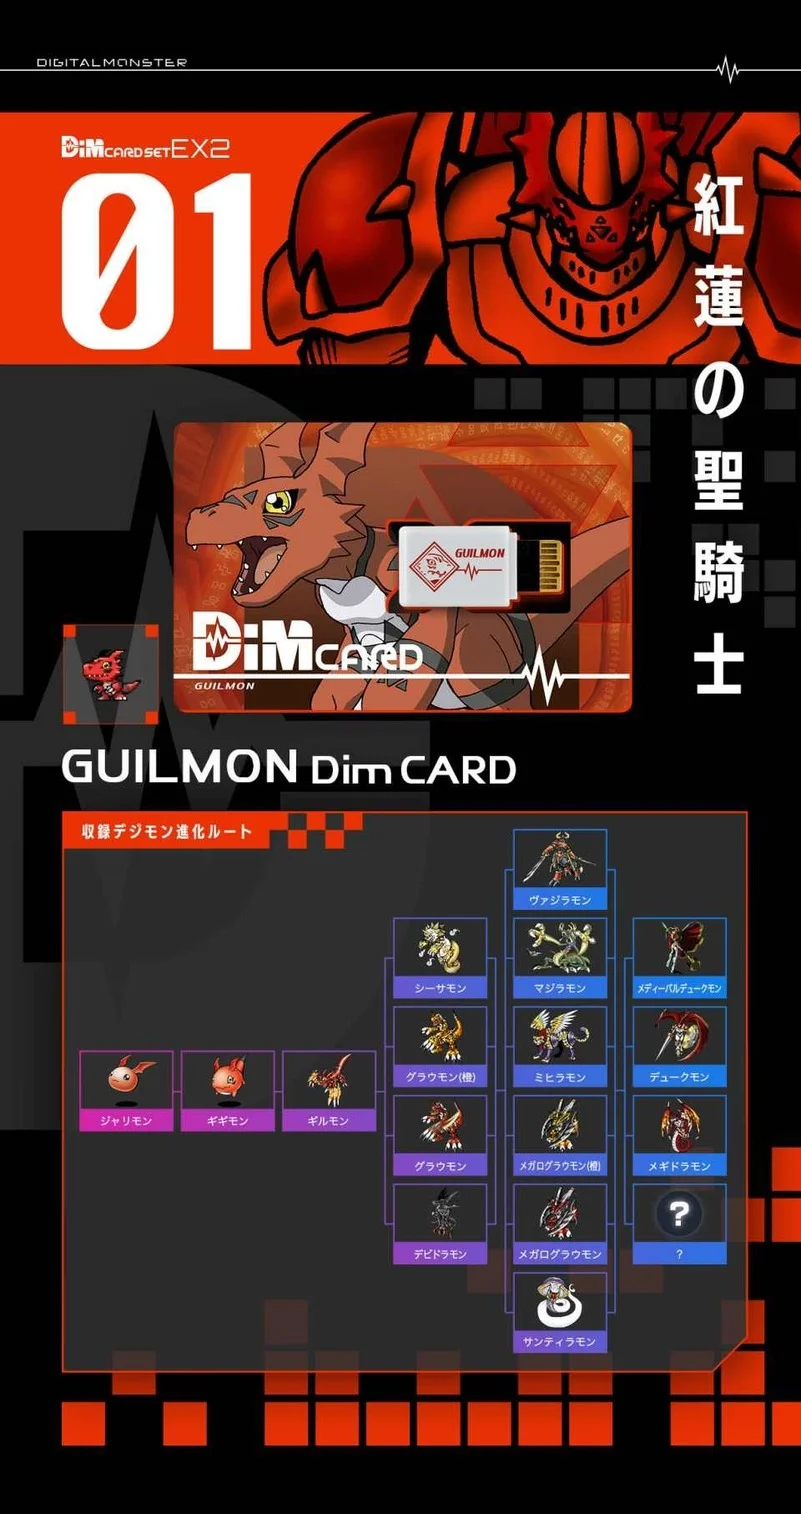 

Bandai Digimon Adventure Digivice Bracelet Anime Figures Medarot Wormmon Guilmon Terriermon Renamo DIM Card Collect toys gifts